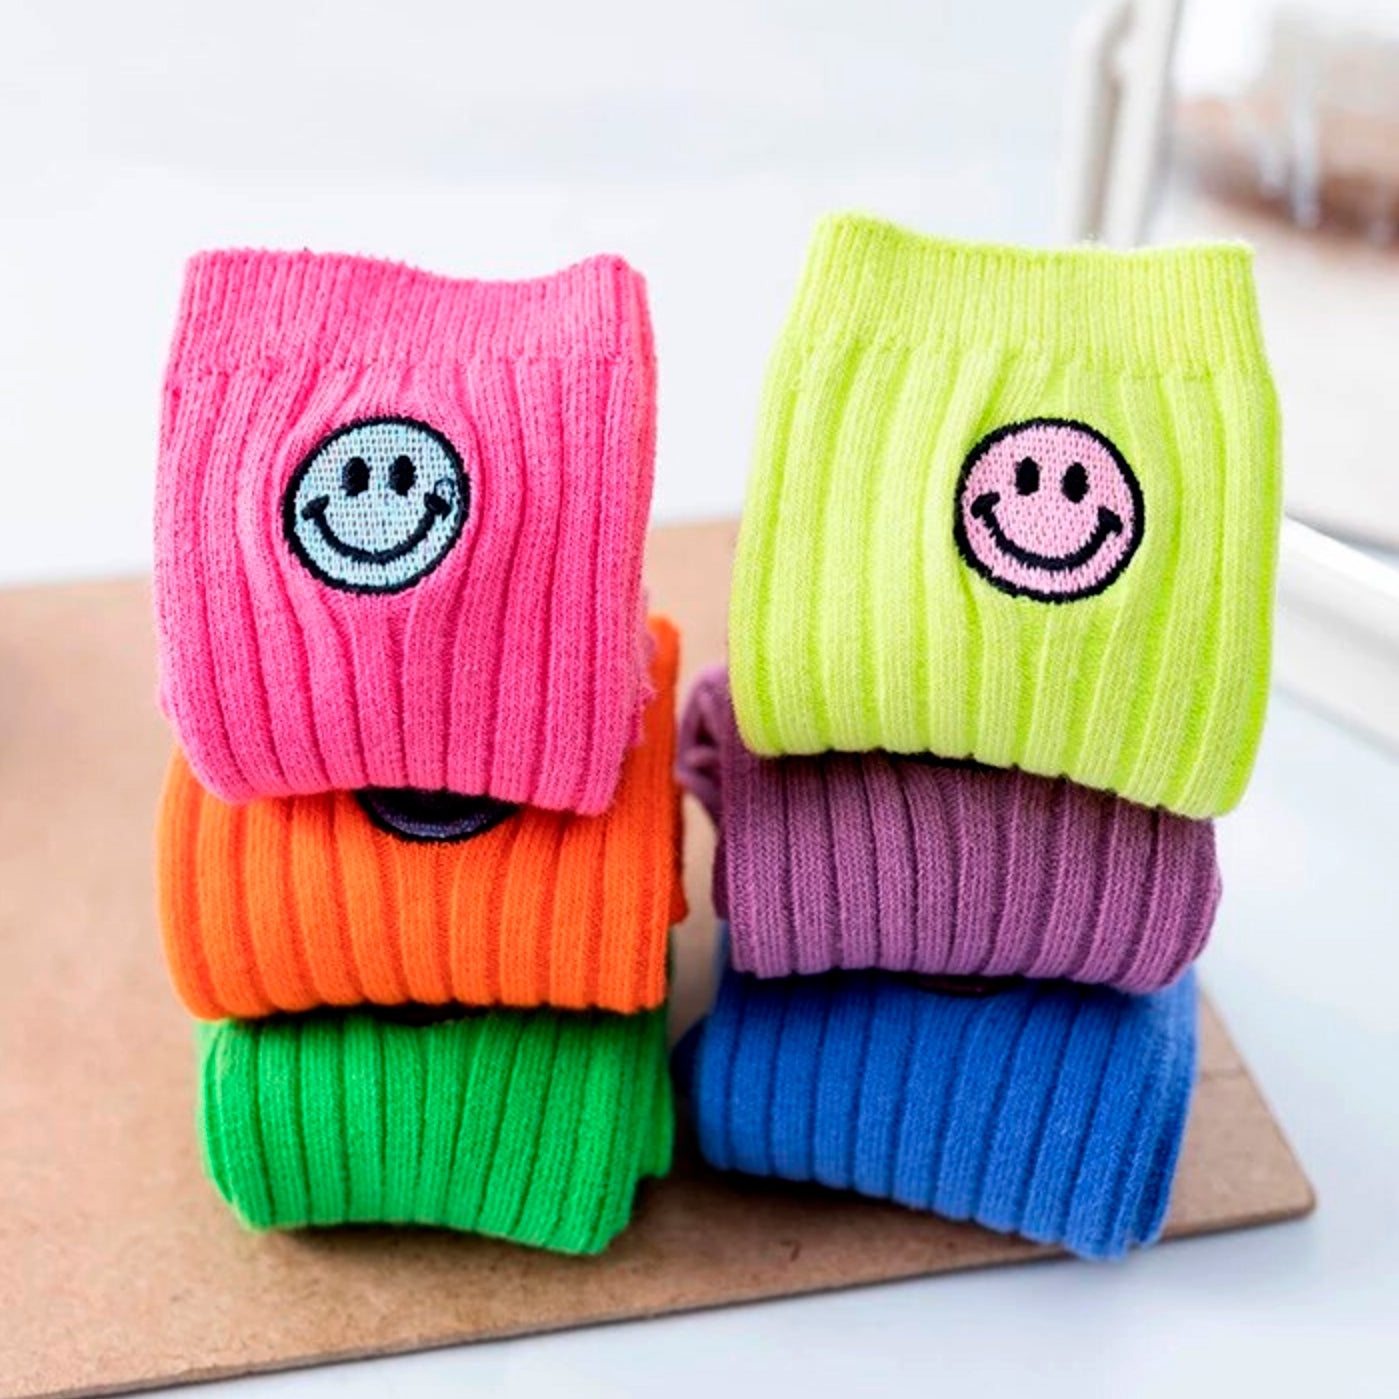 Smiley Face Neon Socks